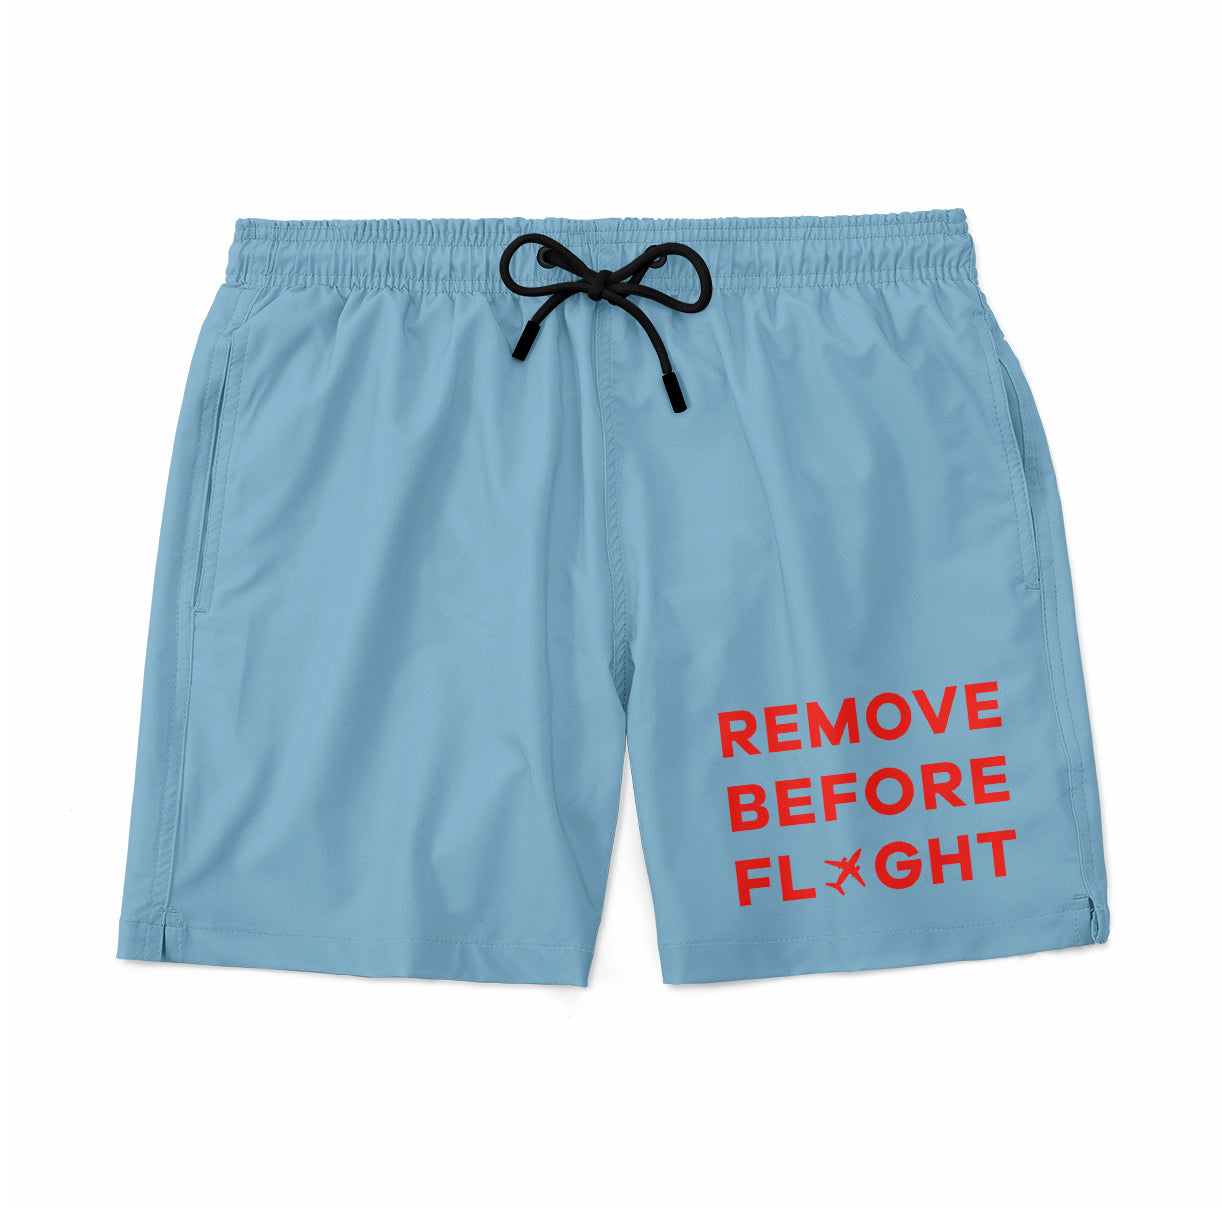 Remove Before Flight Designed Swim Trunks & Shorts